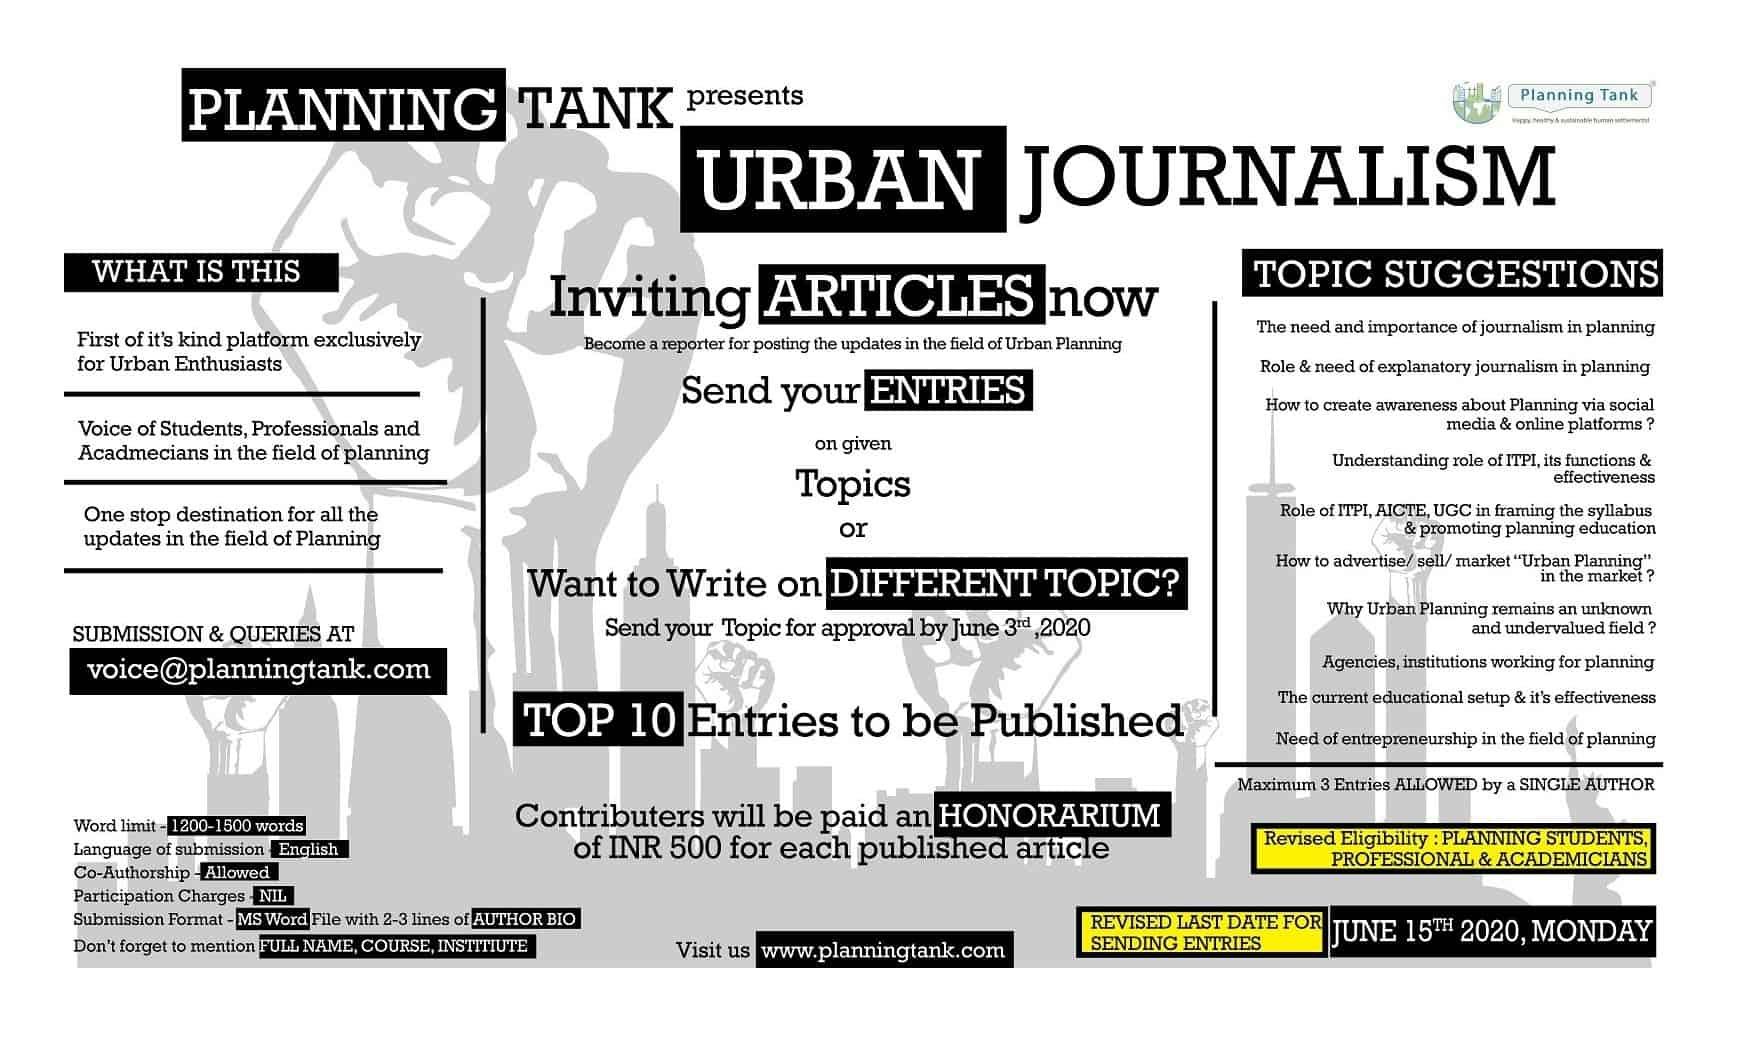 Updated - Urban Journalism Image Poster